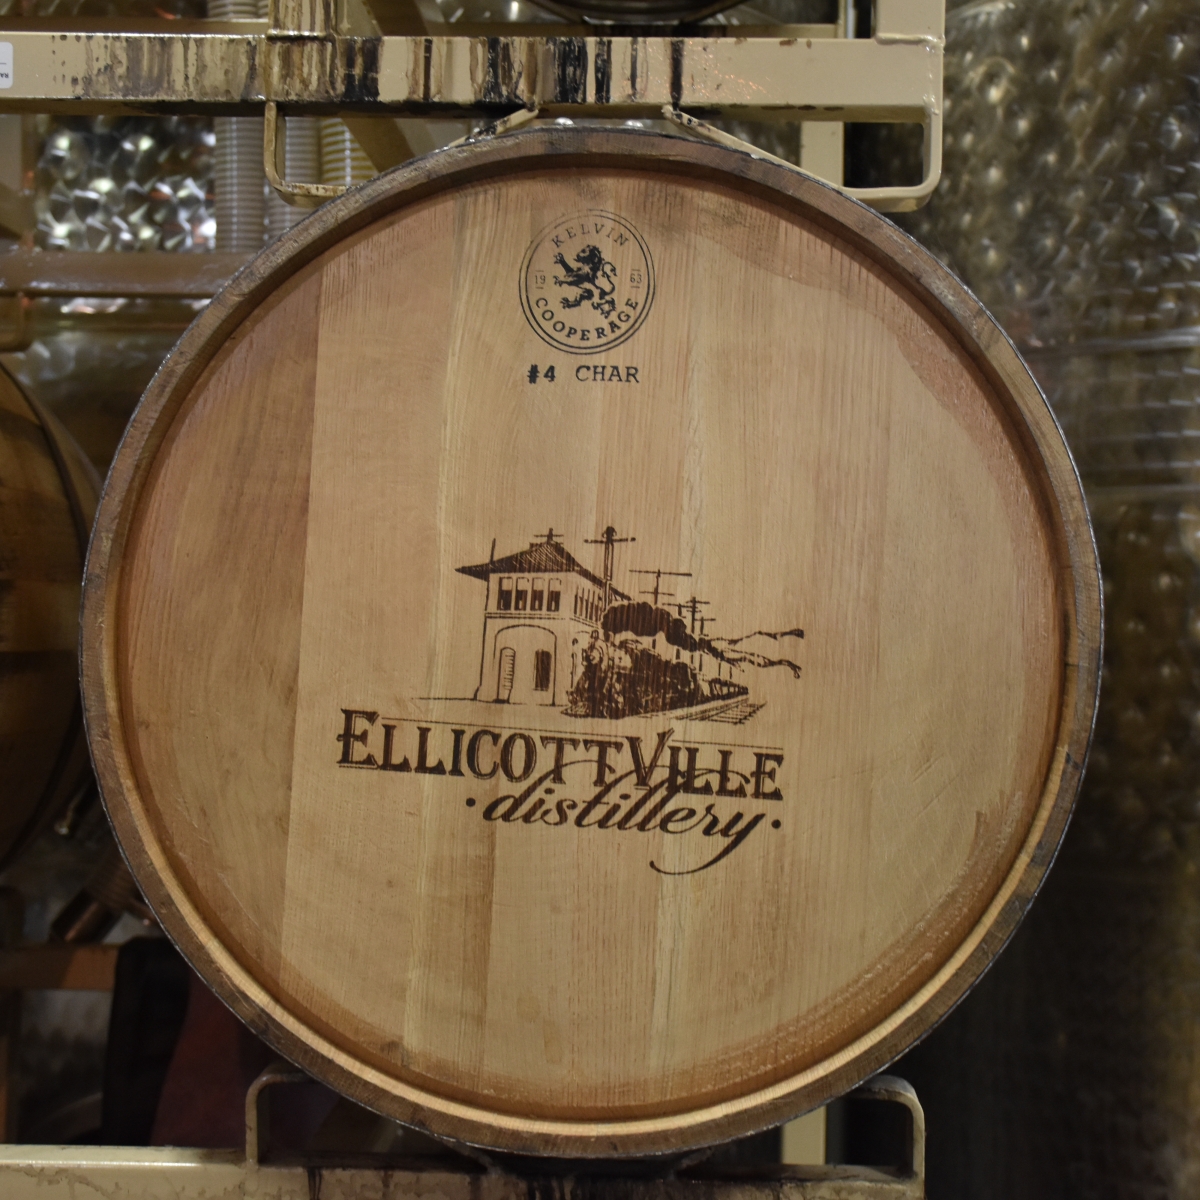 Barrel of liquor at the Ellicottville Distillery